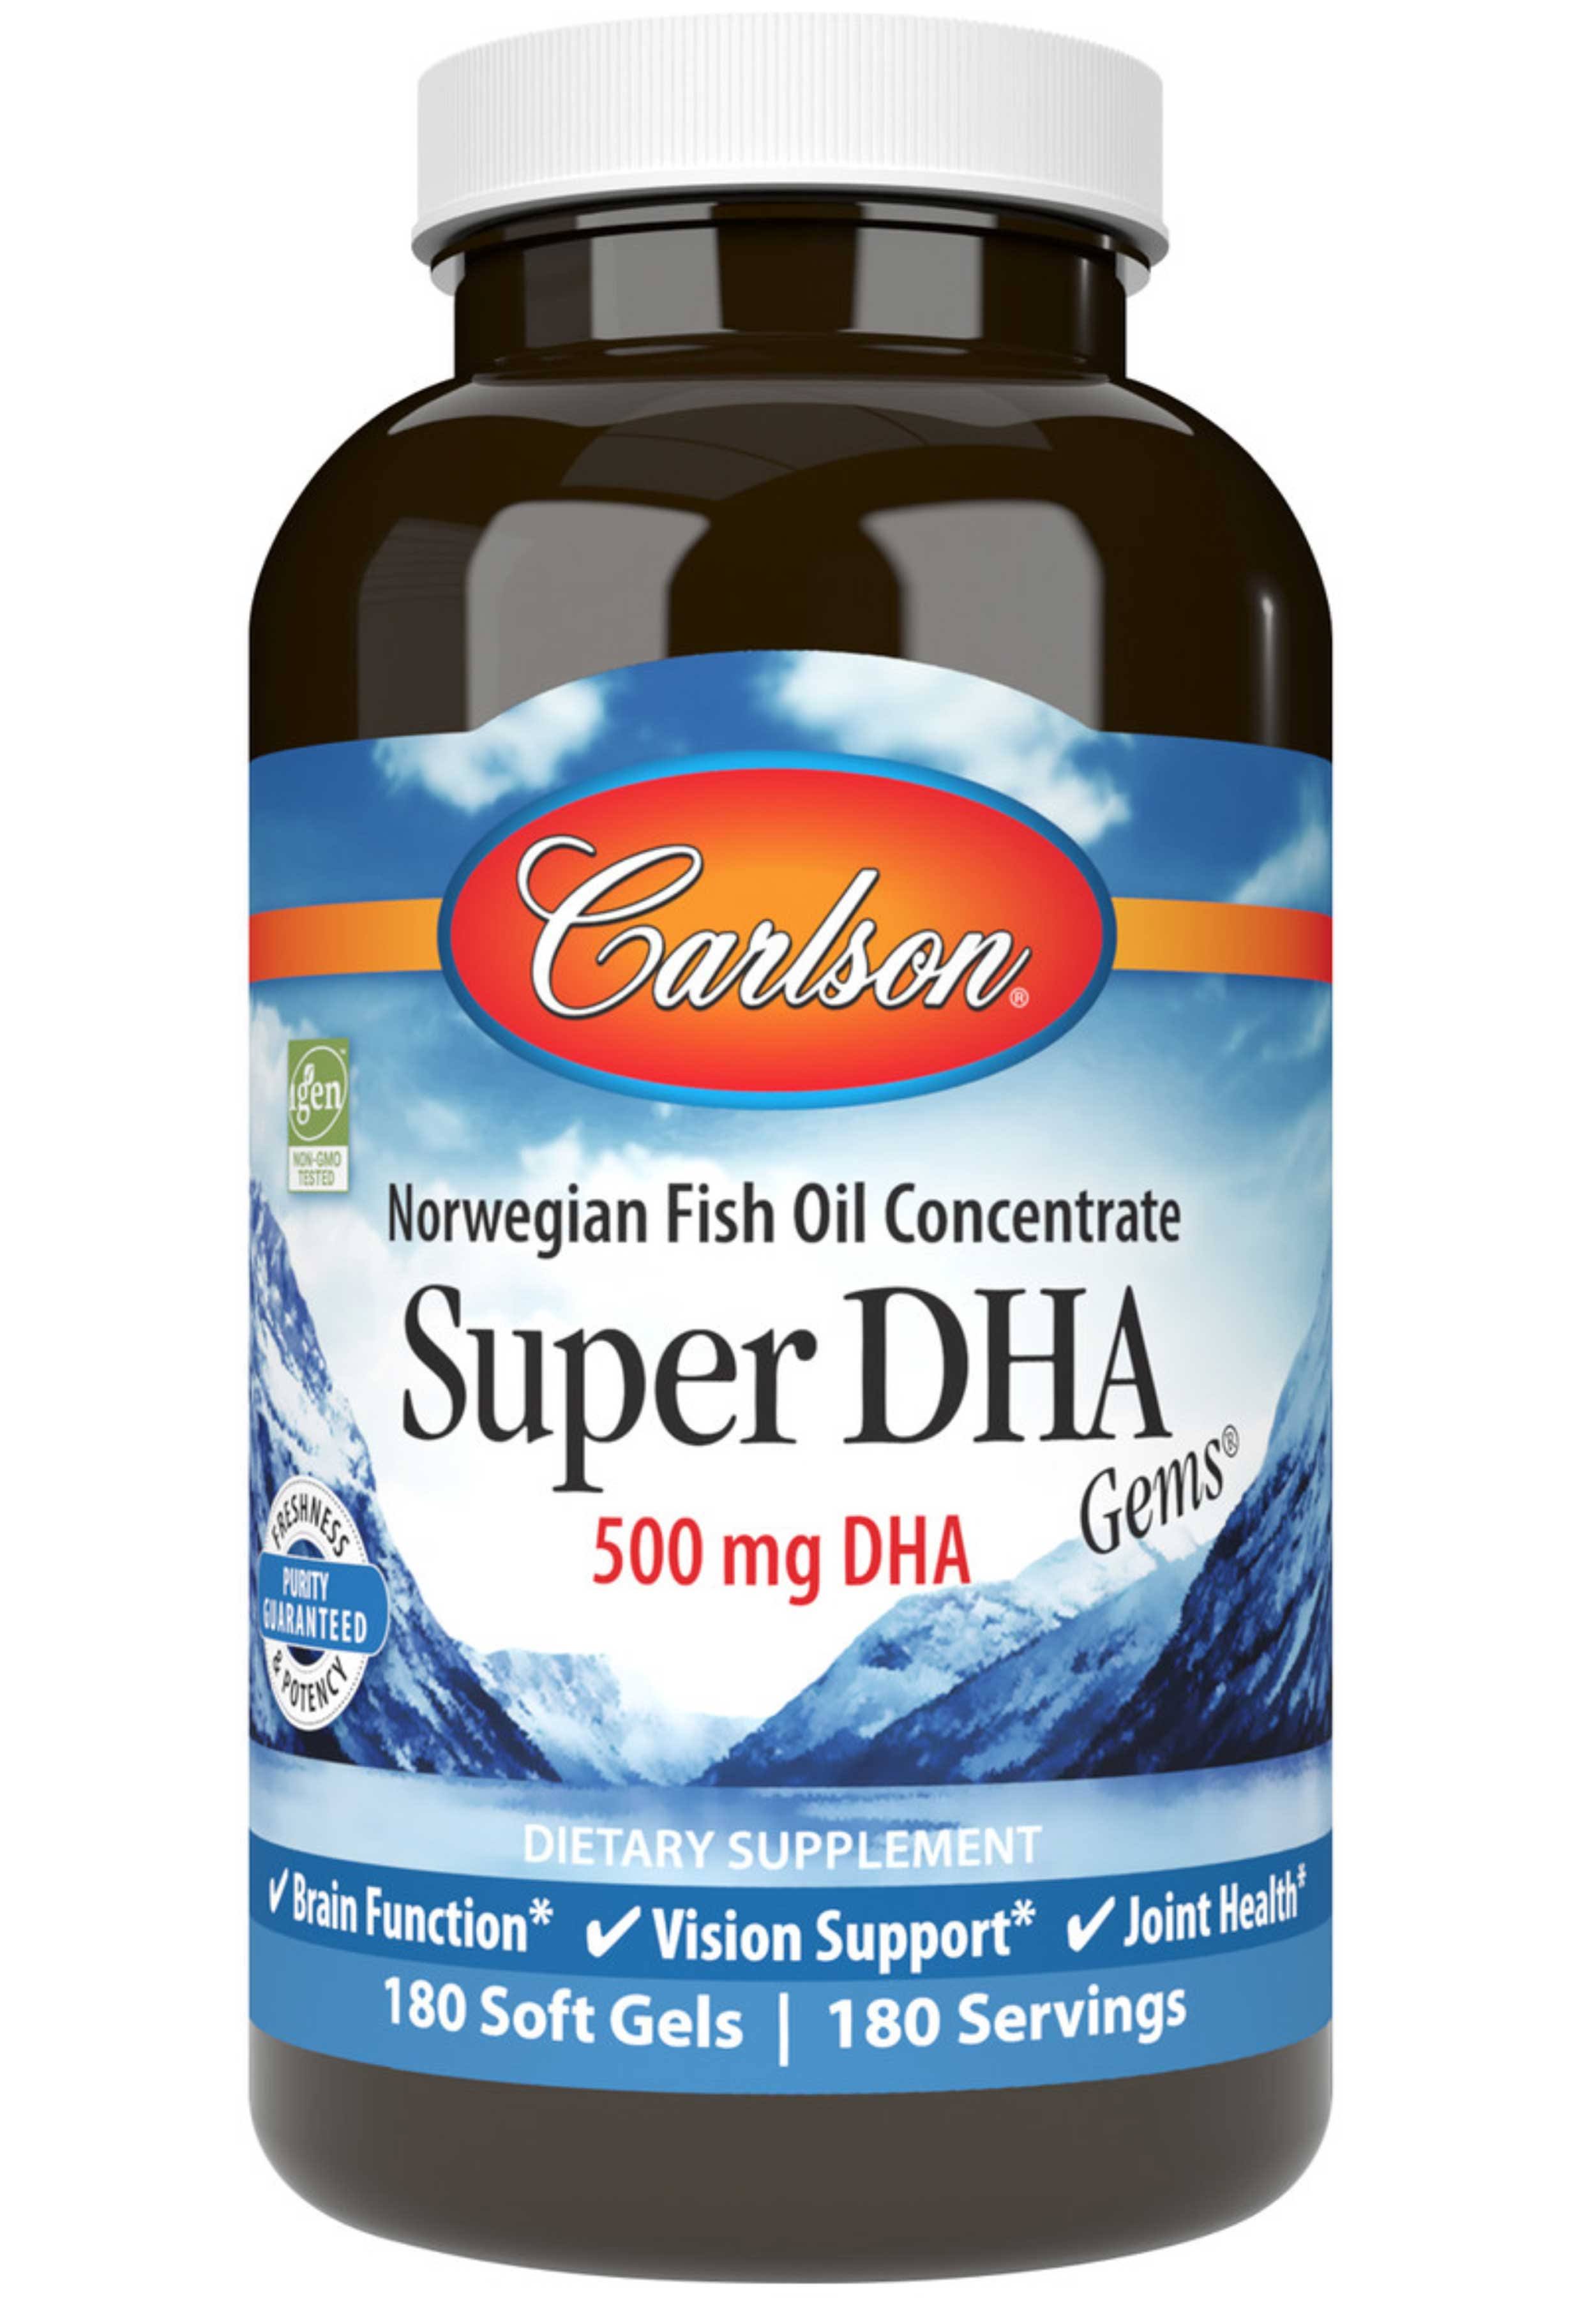 Carlson Super Dha Gems Supplement - 180 Soft Gels, 500mg